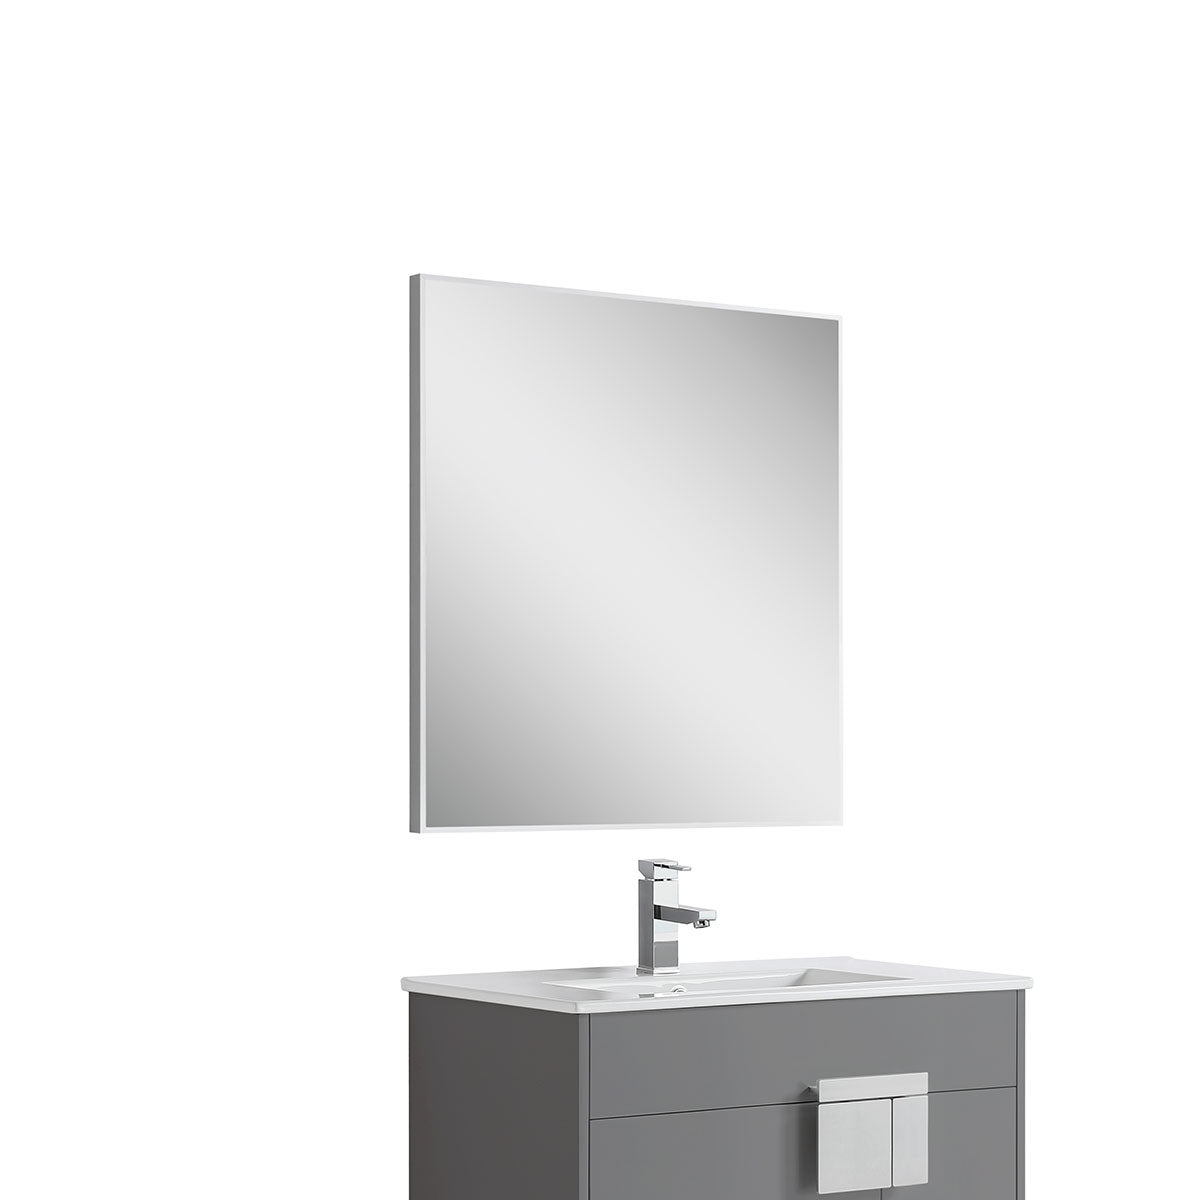 30"w x 32"h Aluminum Rectangle Bathroom Wall Mirror (Silver) - iStyle Bath